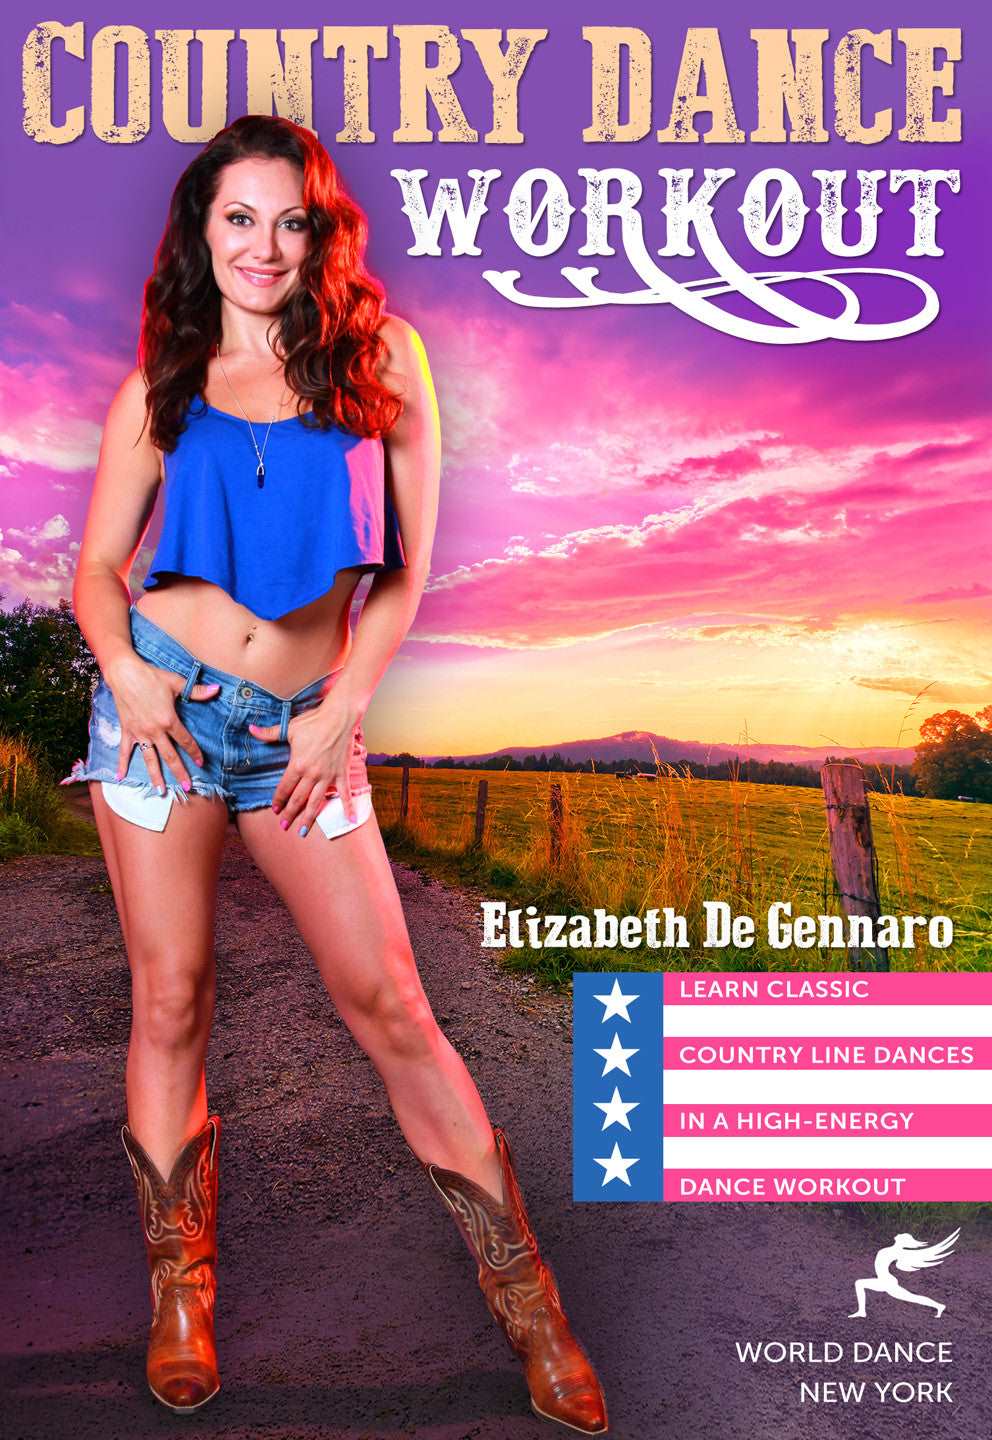 "Country Dance Workout" DVD with Elizabeth De Gennaro - World Dance New York